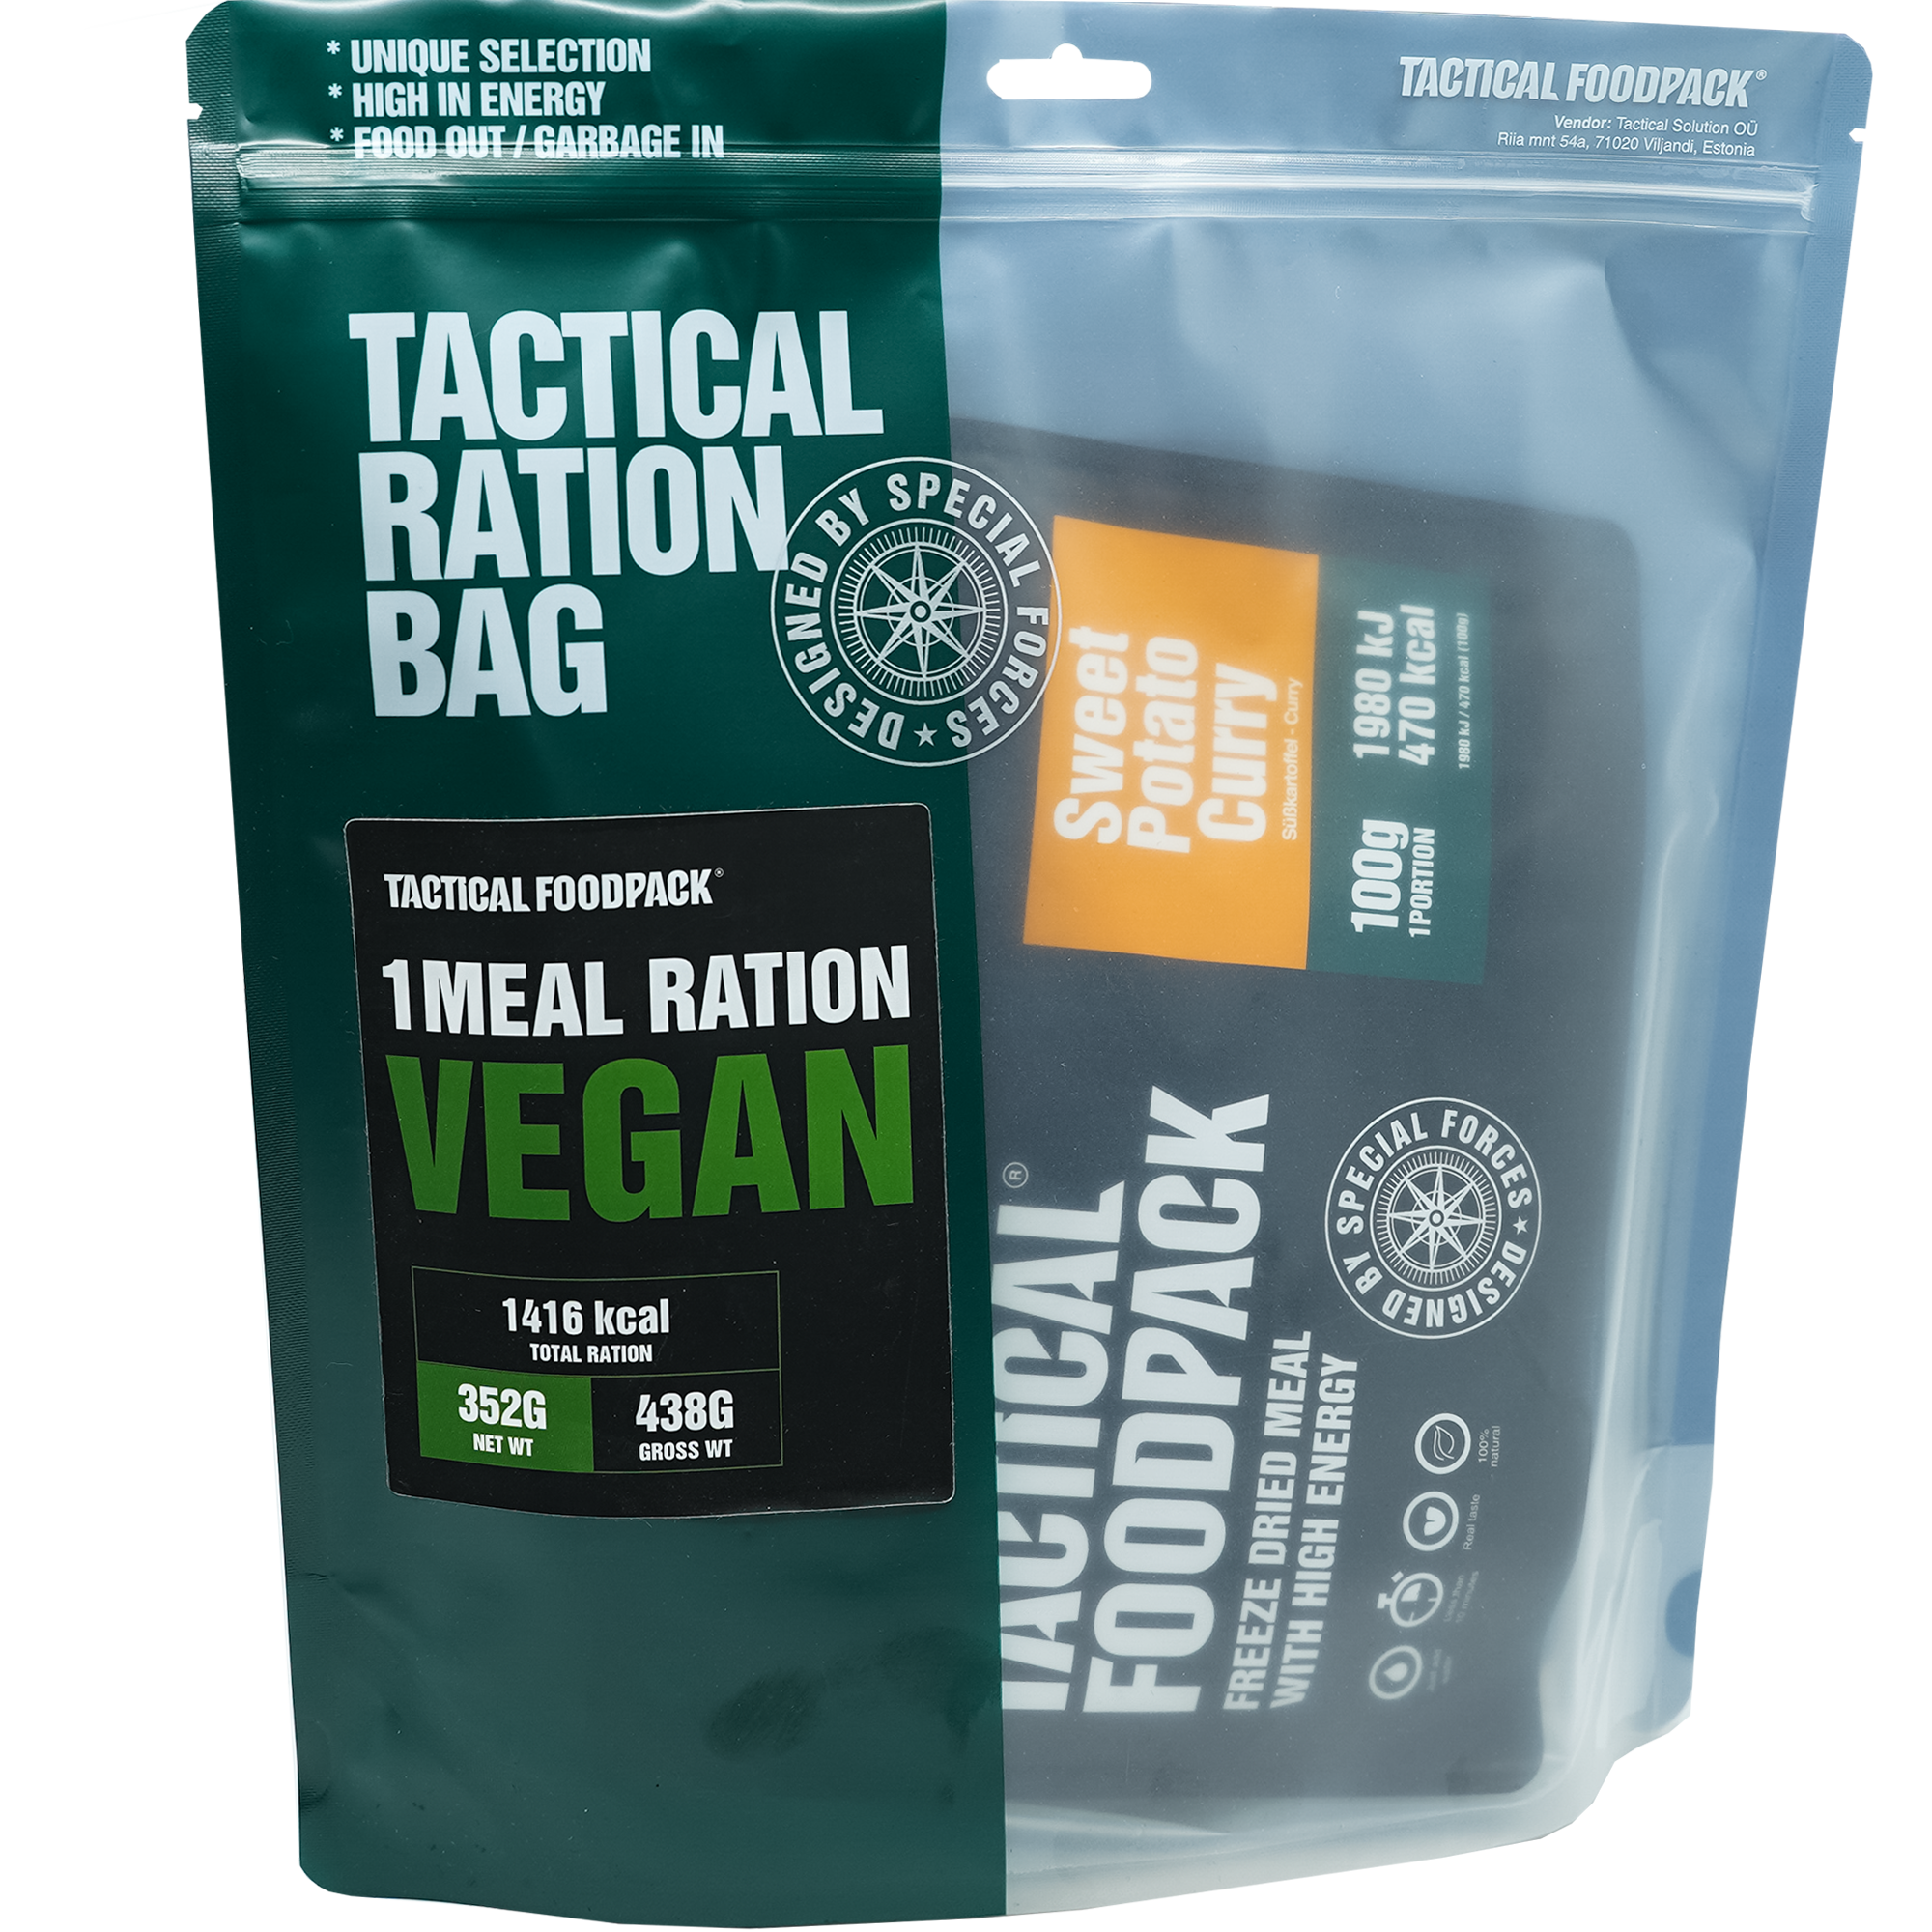 1 Meal Ration VEGAN 352g - Tactical Foodpack